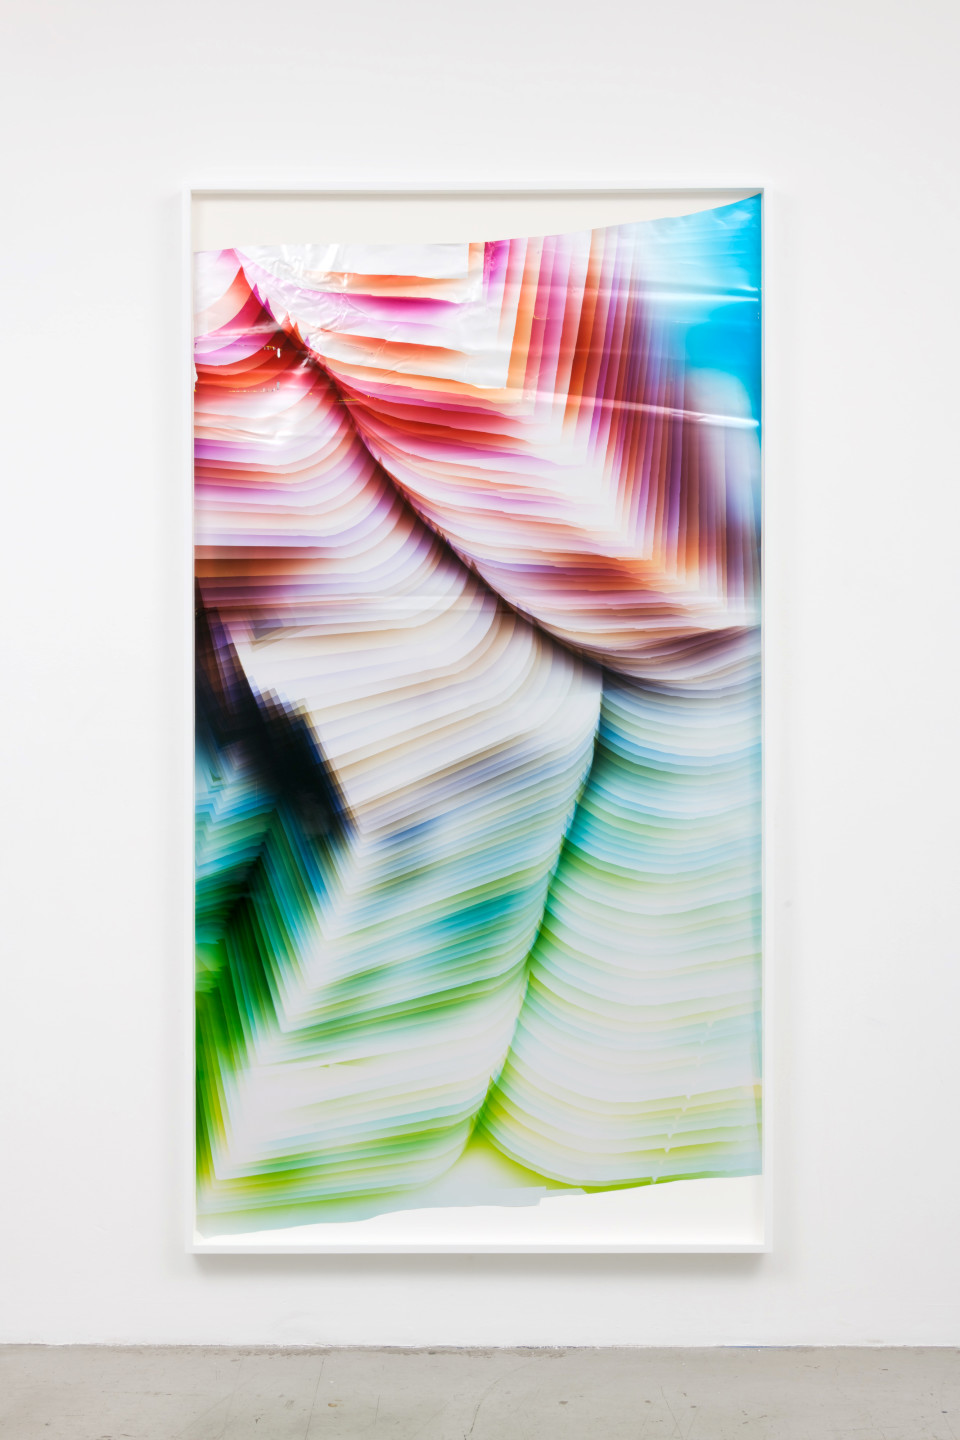 Image: Mariah Robertson  255, 2017  unique chromogenic print  51 1/2 x 93 1/2 inches (130.8 x 237.5 cm)